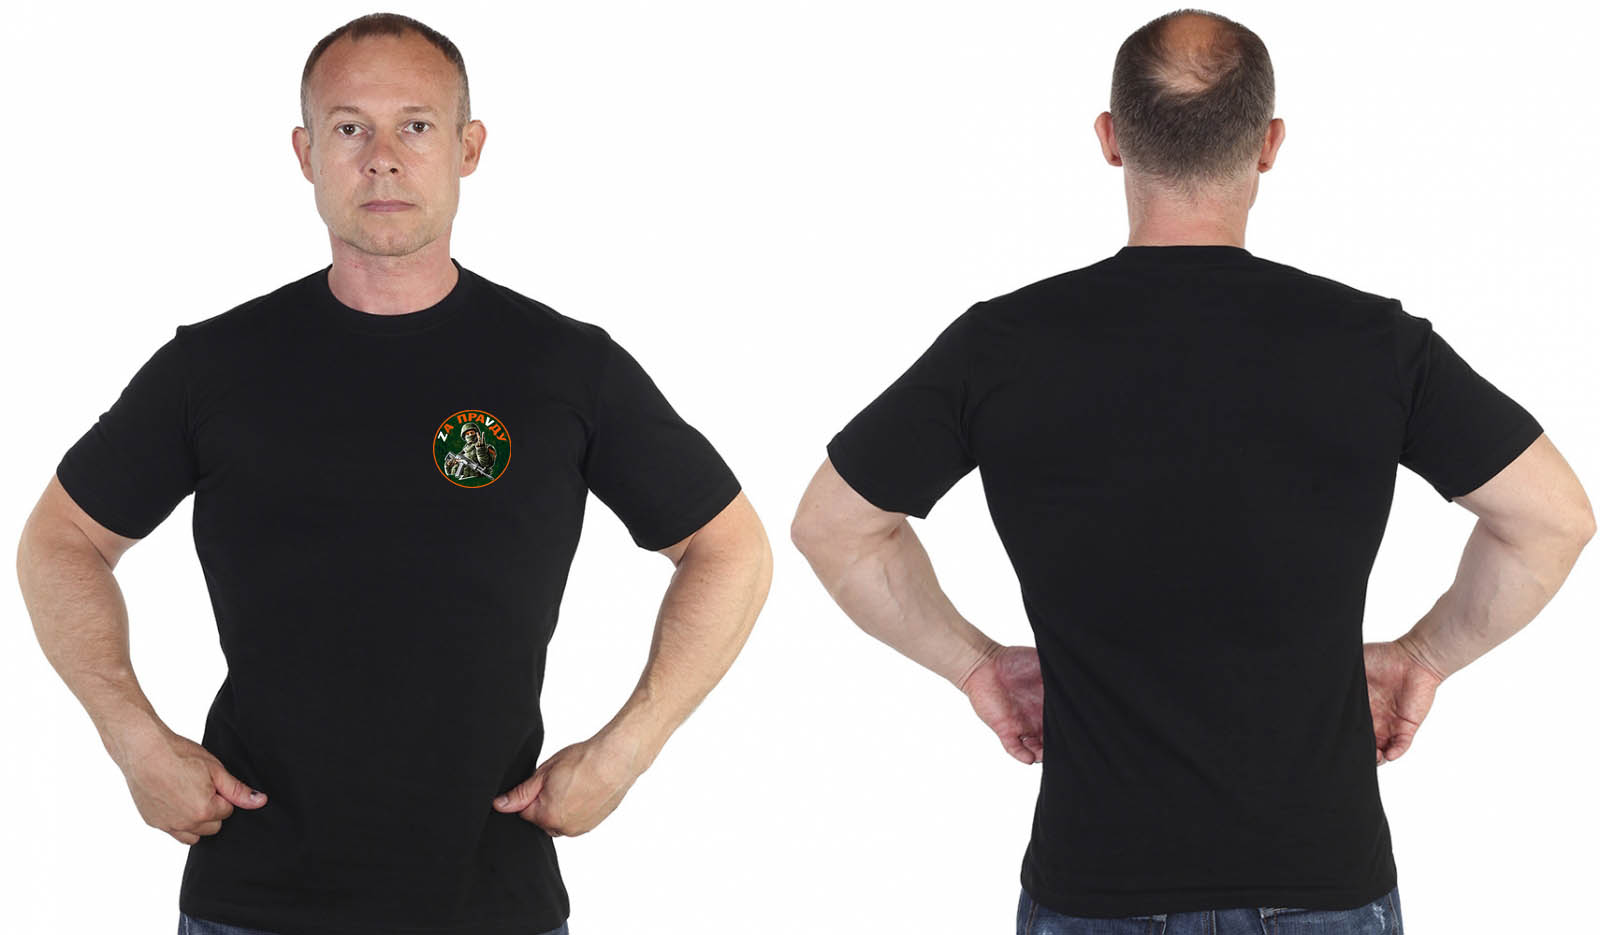 Мужские футболки с символикой Операция Z